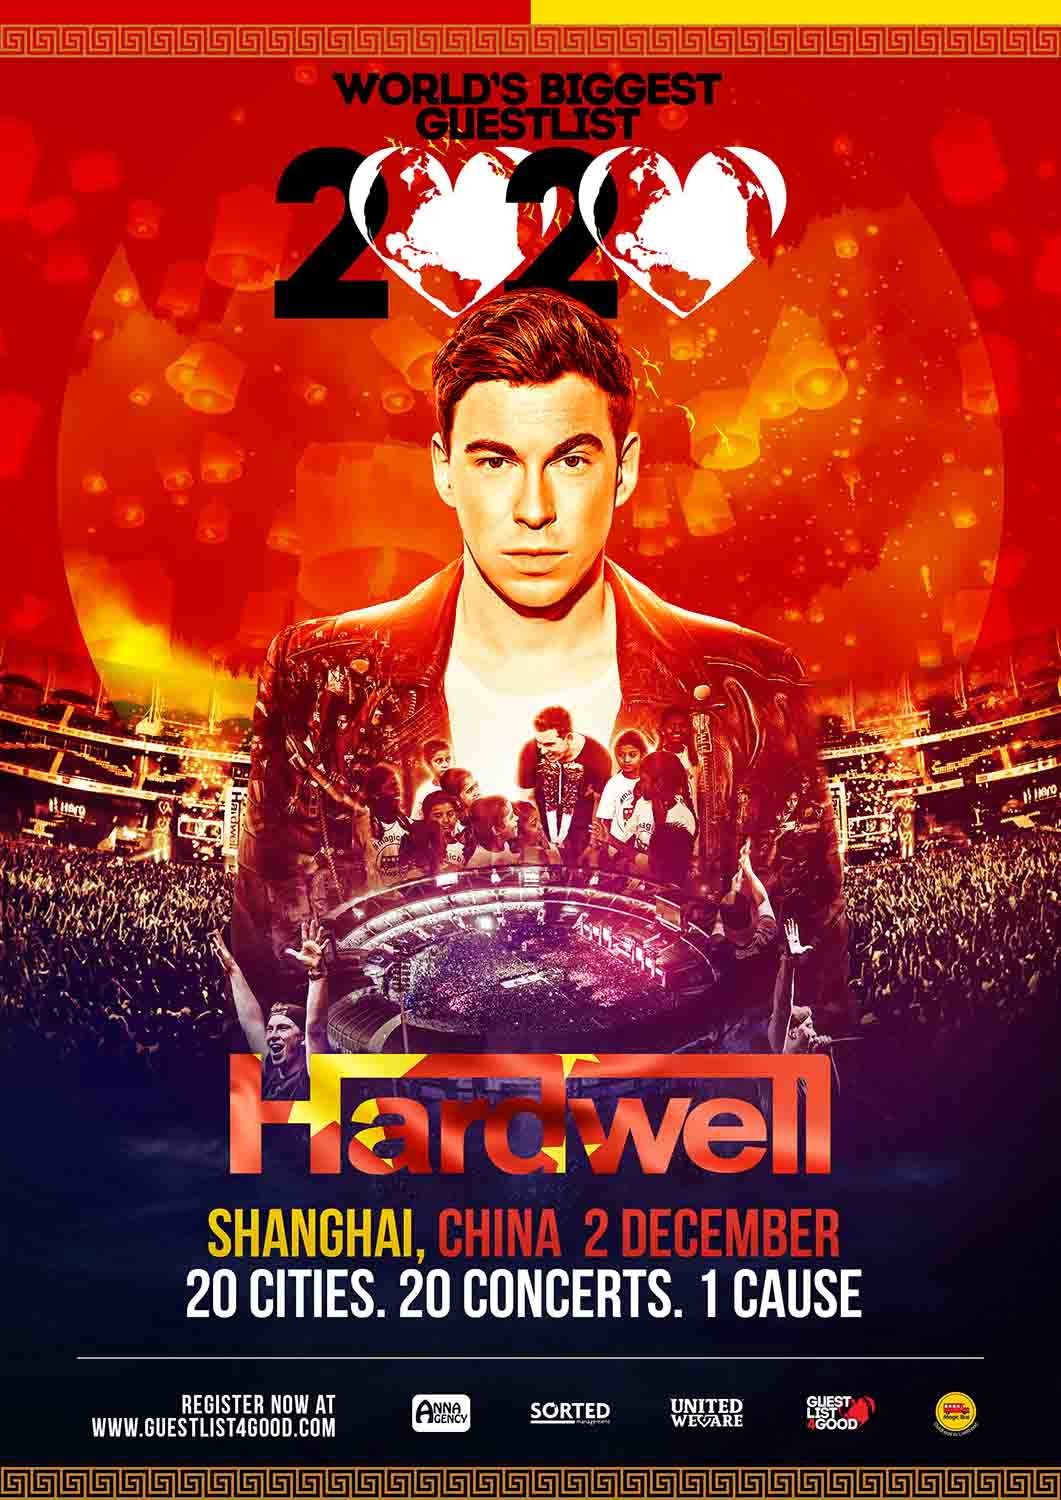 WBGF2020 with headliner Hardwell; Shanghai, China